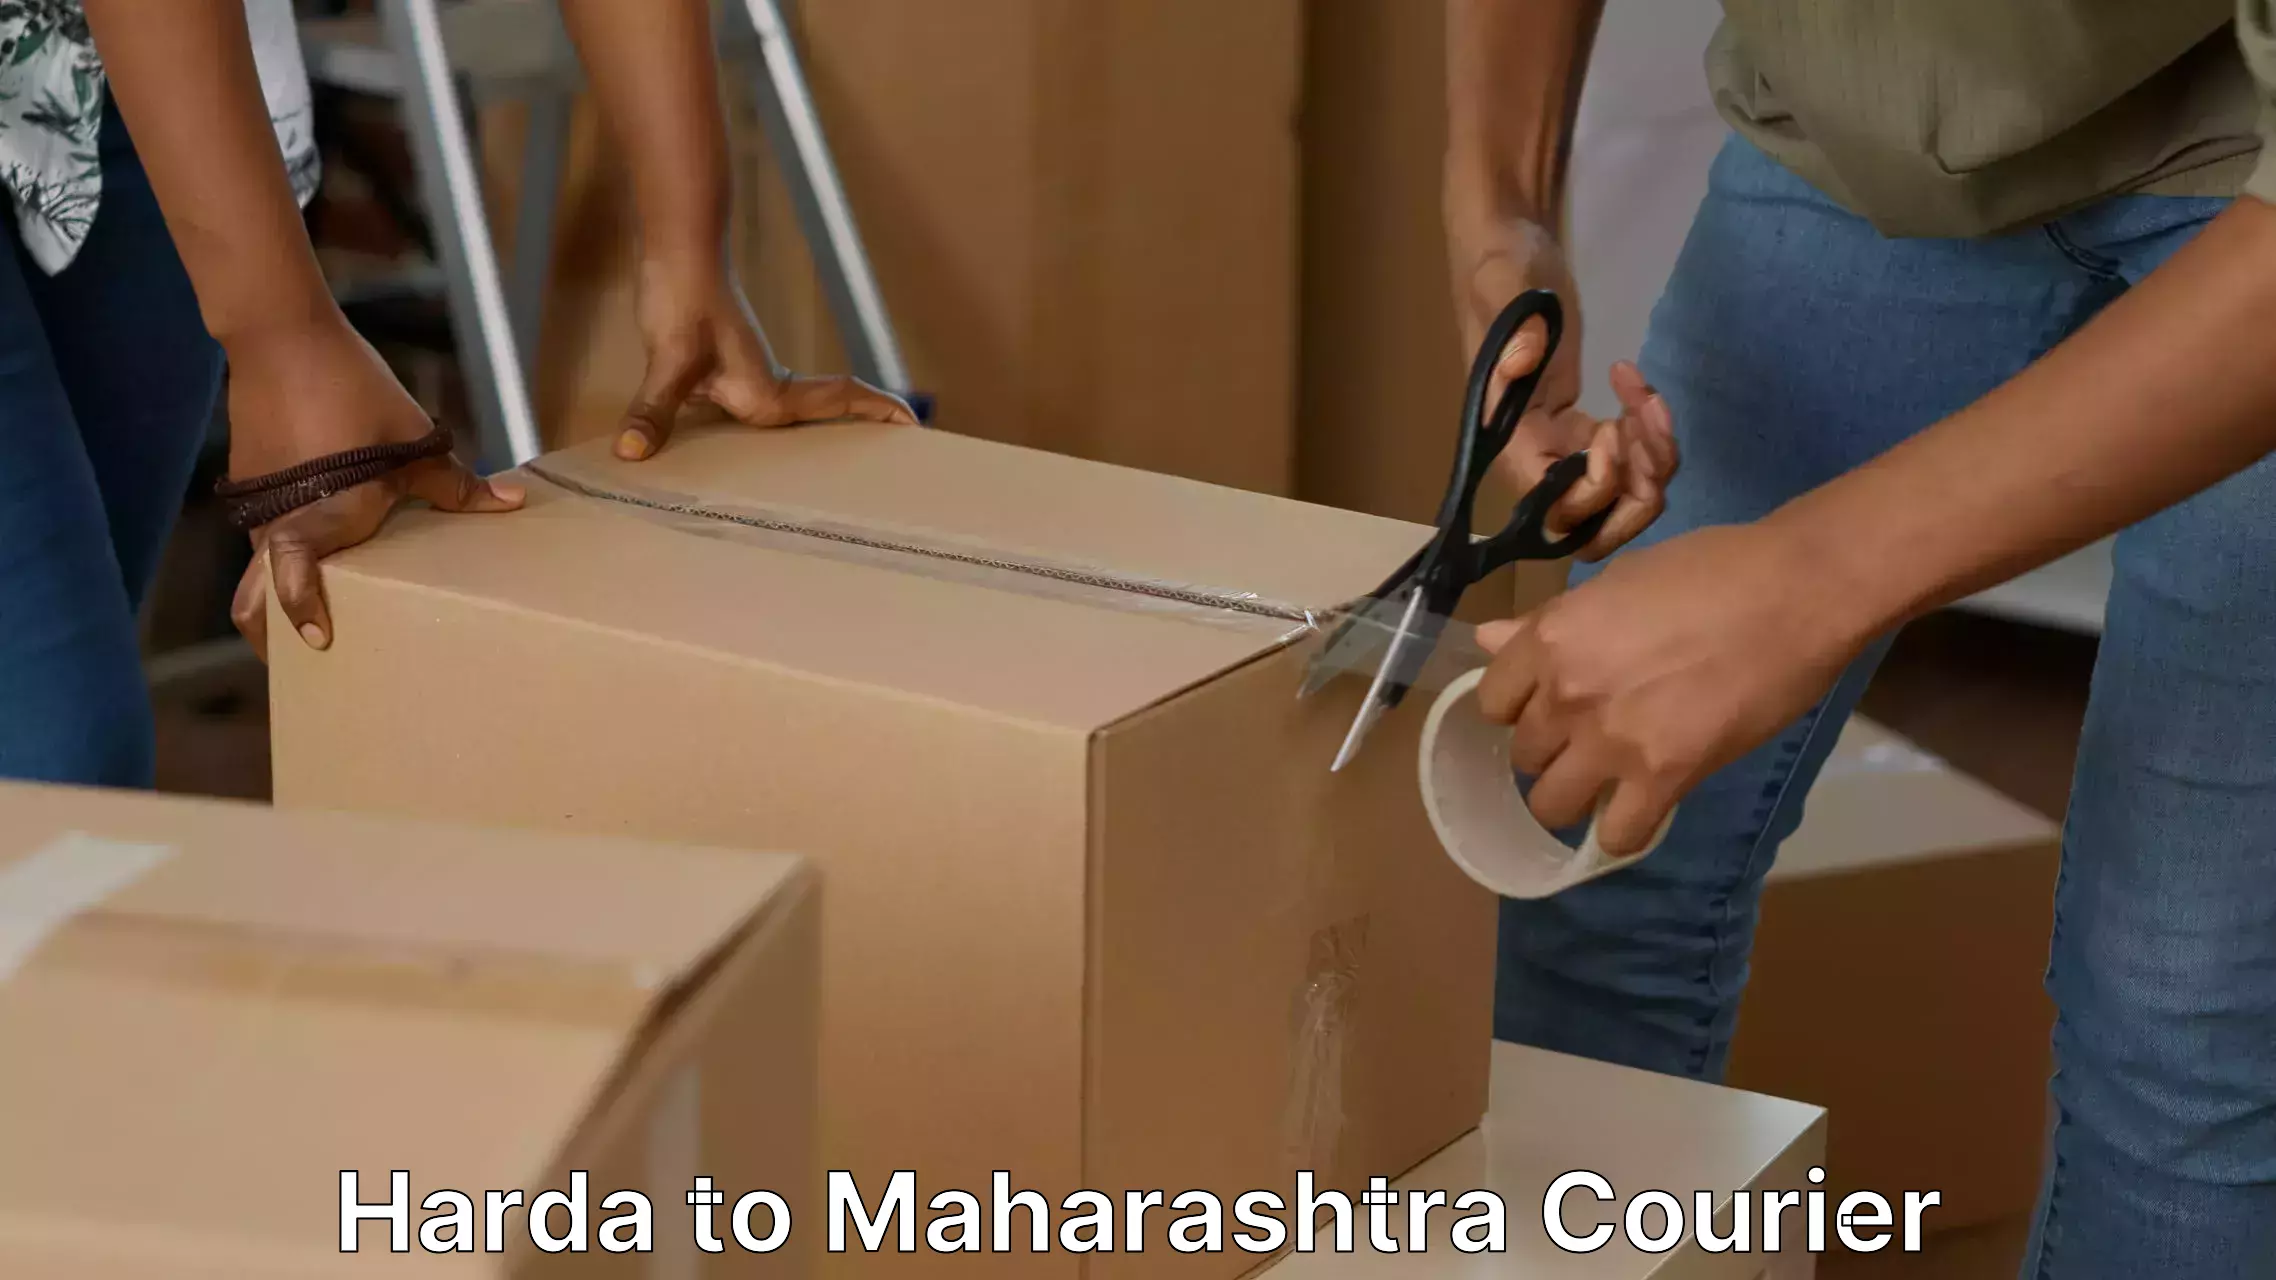 Home goods moving company Harda to Aurangabad